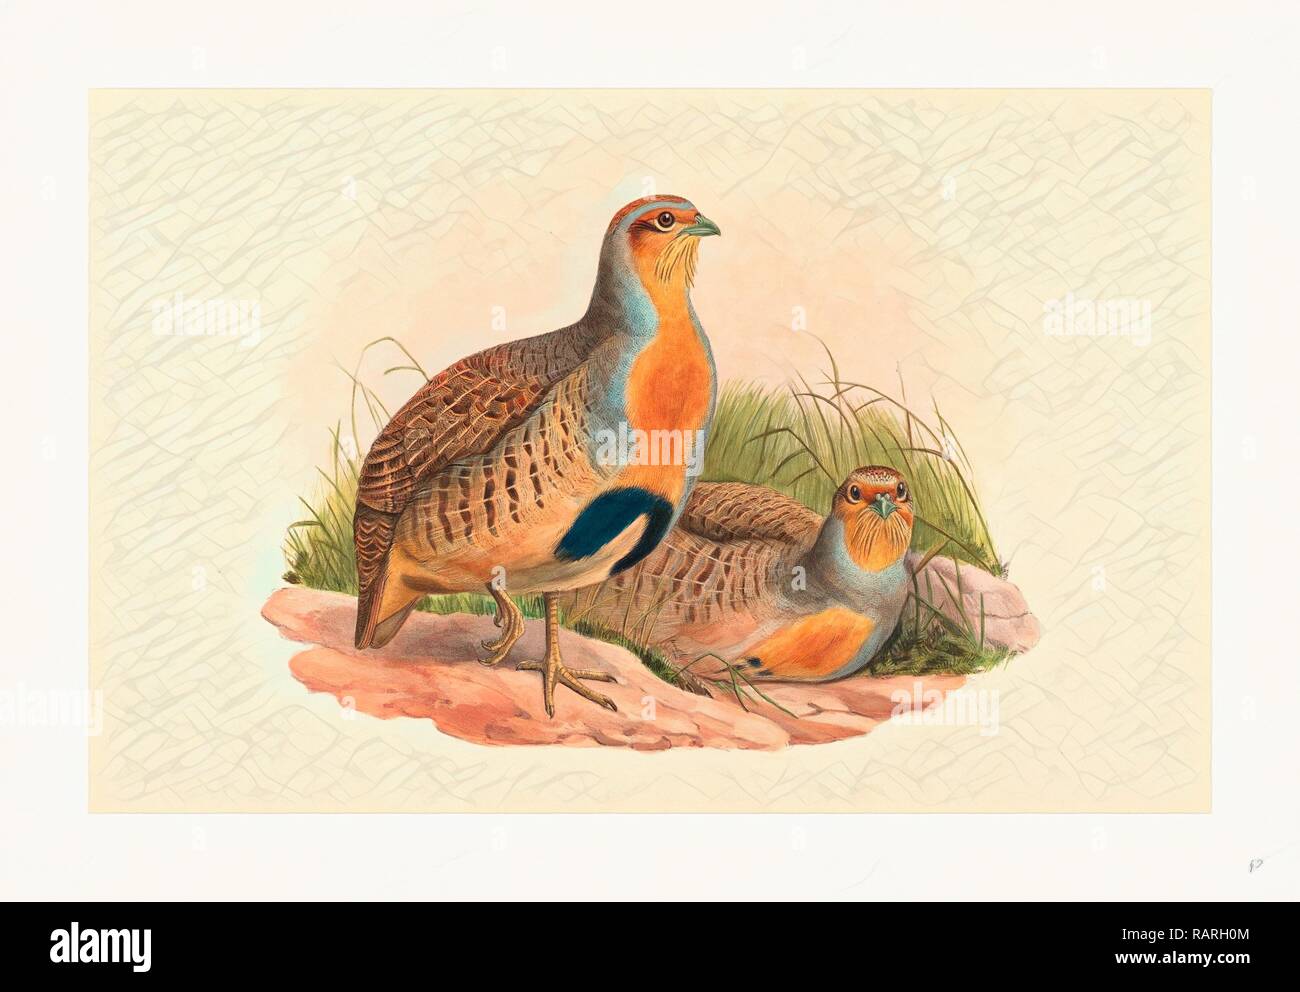 John Gould and H.C. Richter (British, 1804 1881 ), Perdix barbata (Daurian Partridge), colored lithograph. Reimagined Stock Photo